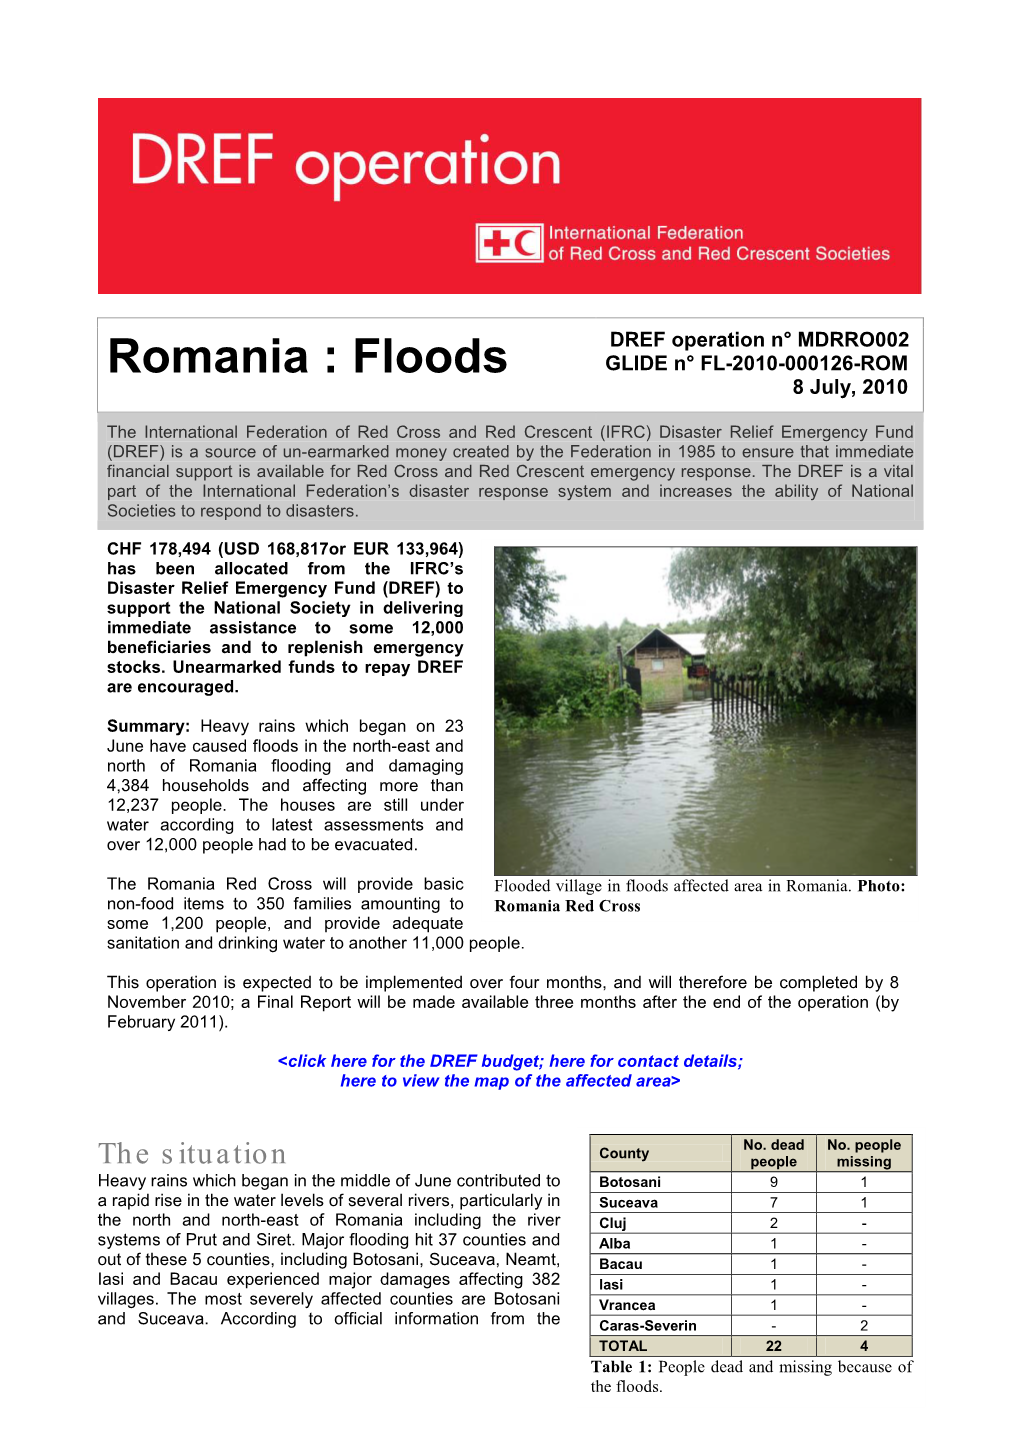 Floods GLIDE N° FL-2010-000126-ROM 8 July, 2010